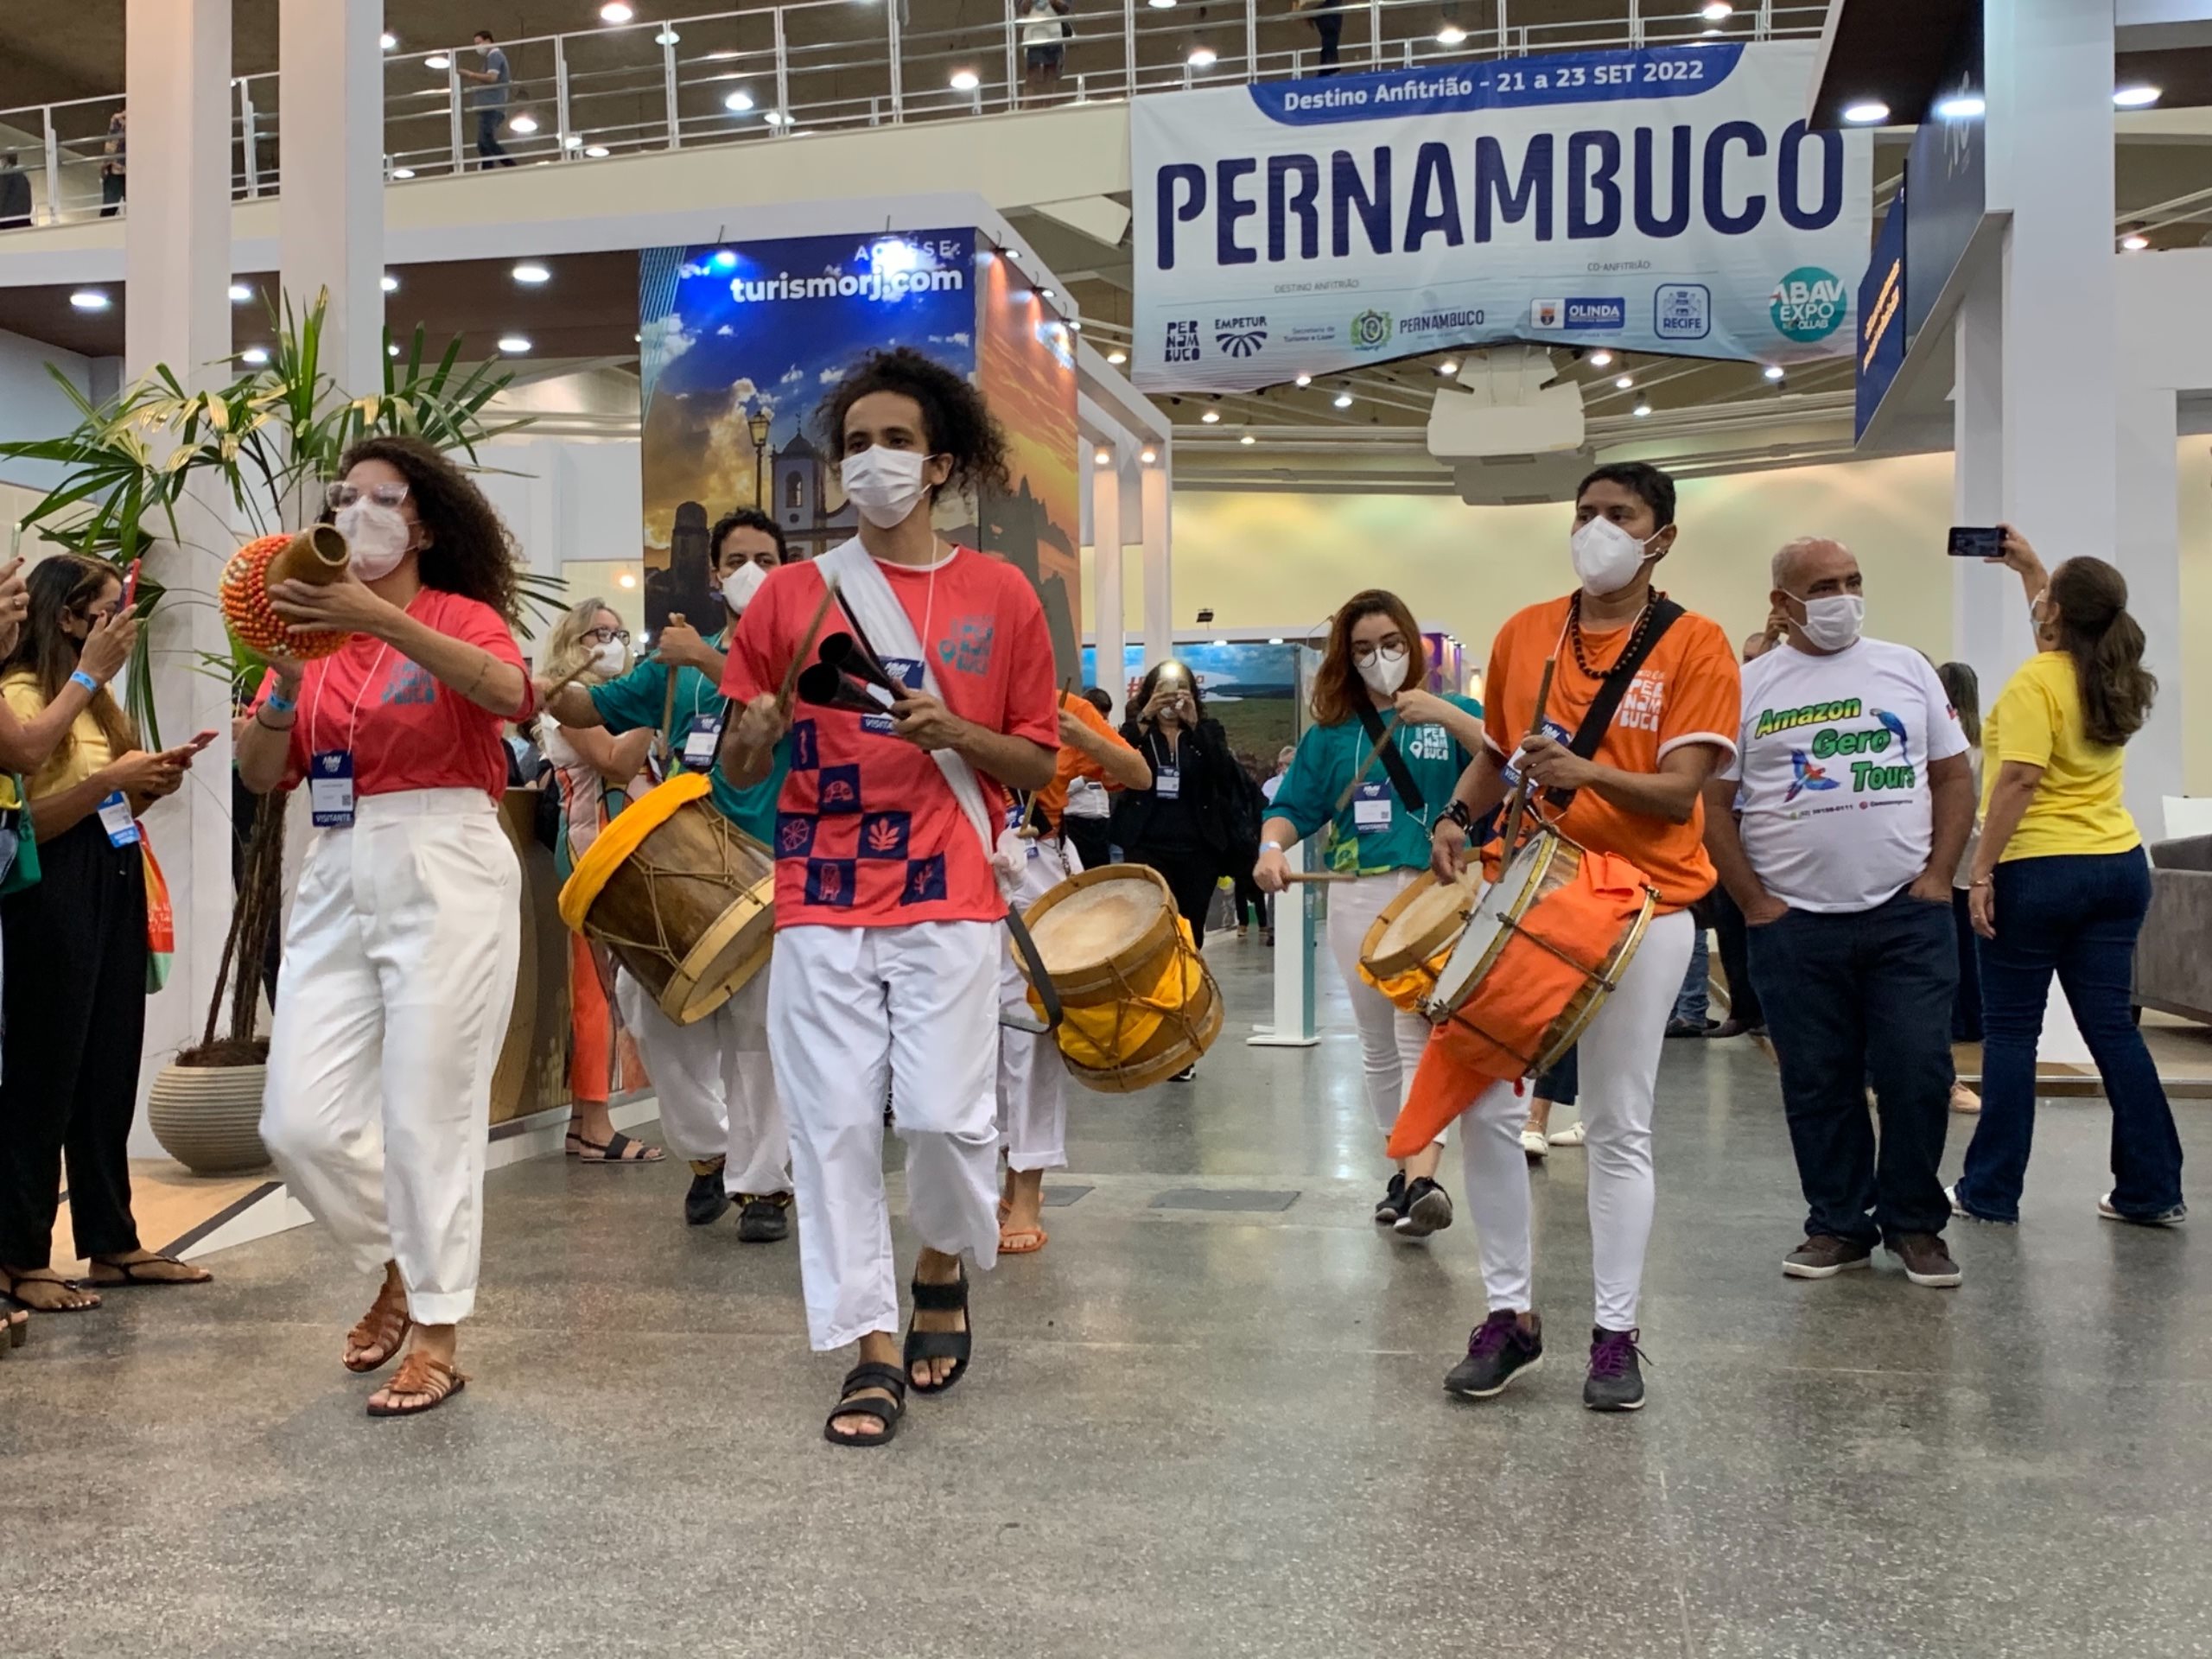 Anúncio de Pernambuco como a cidade sede da Abav Expo 2022